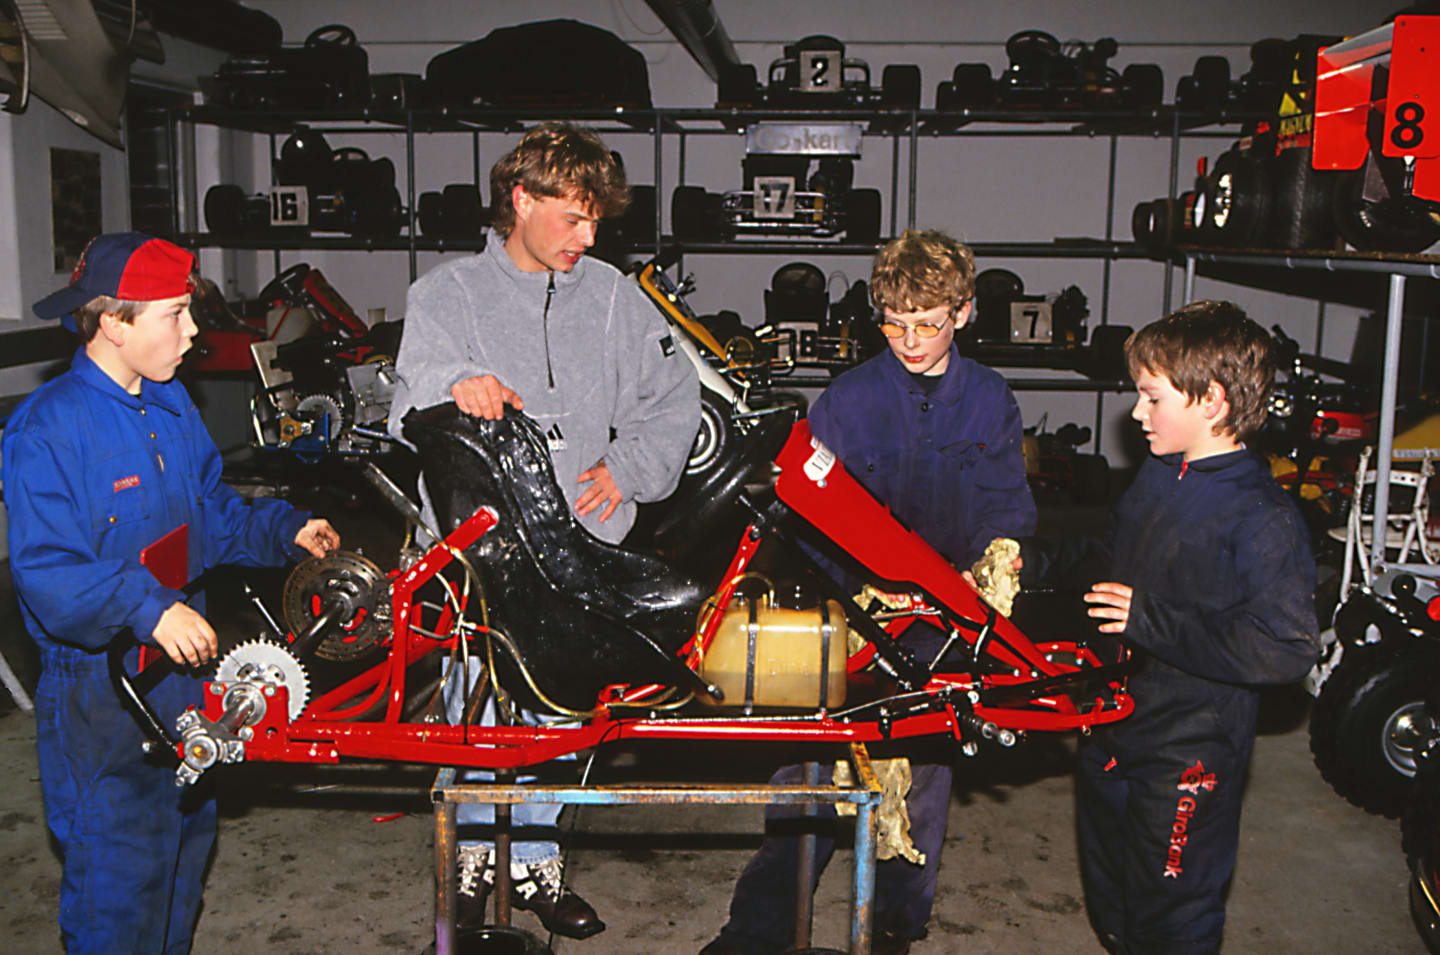 Jan Magnussen (DEN), centre, teaches the mechanics of a go-kart to young